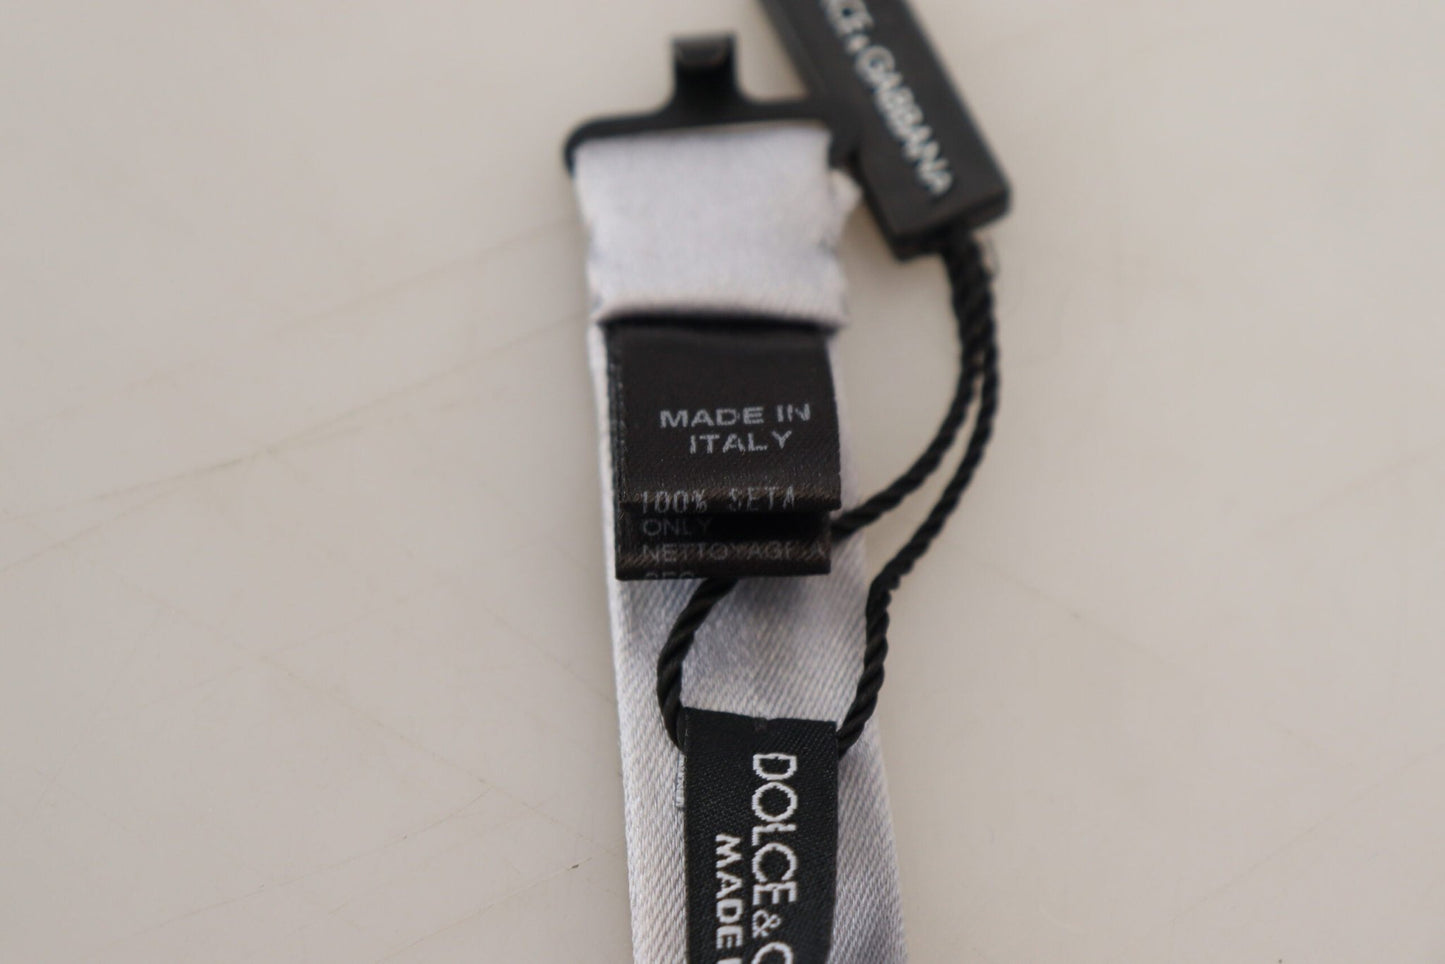 Dolce & Gabbana Elegant Gray Silk Bow Tie